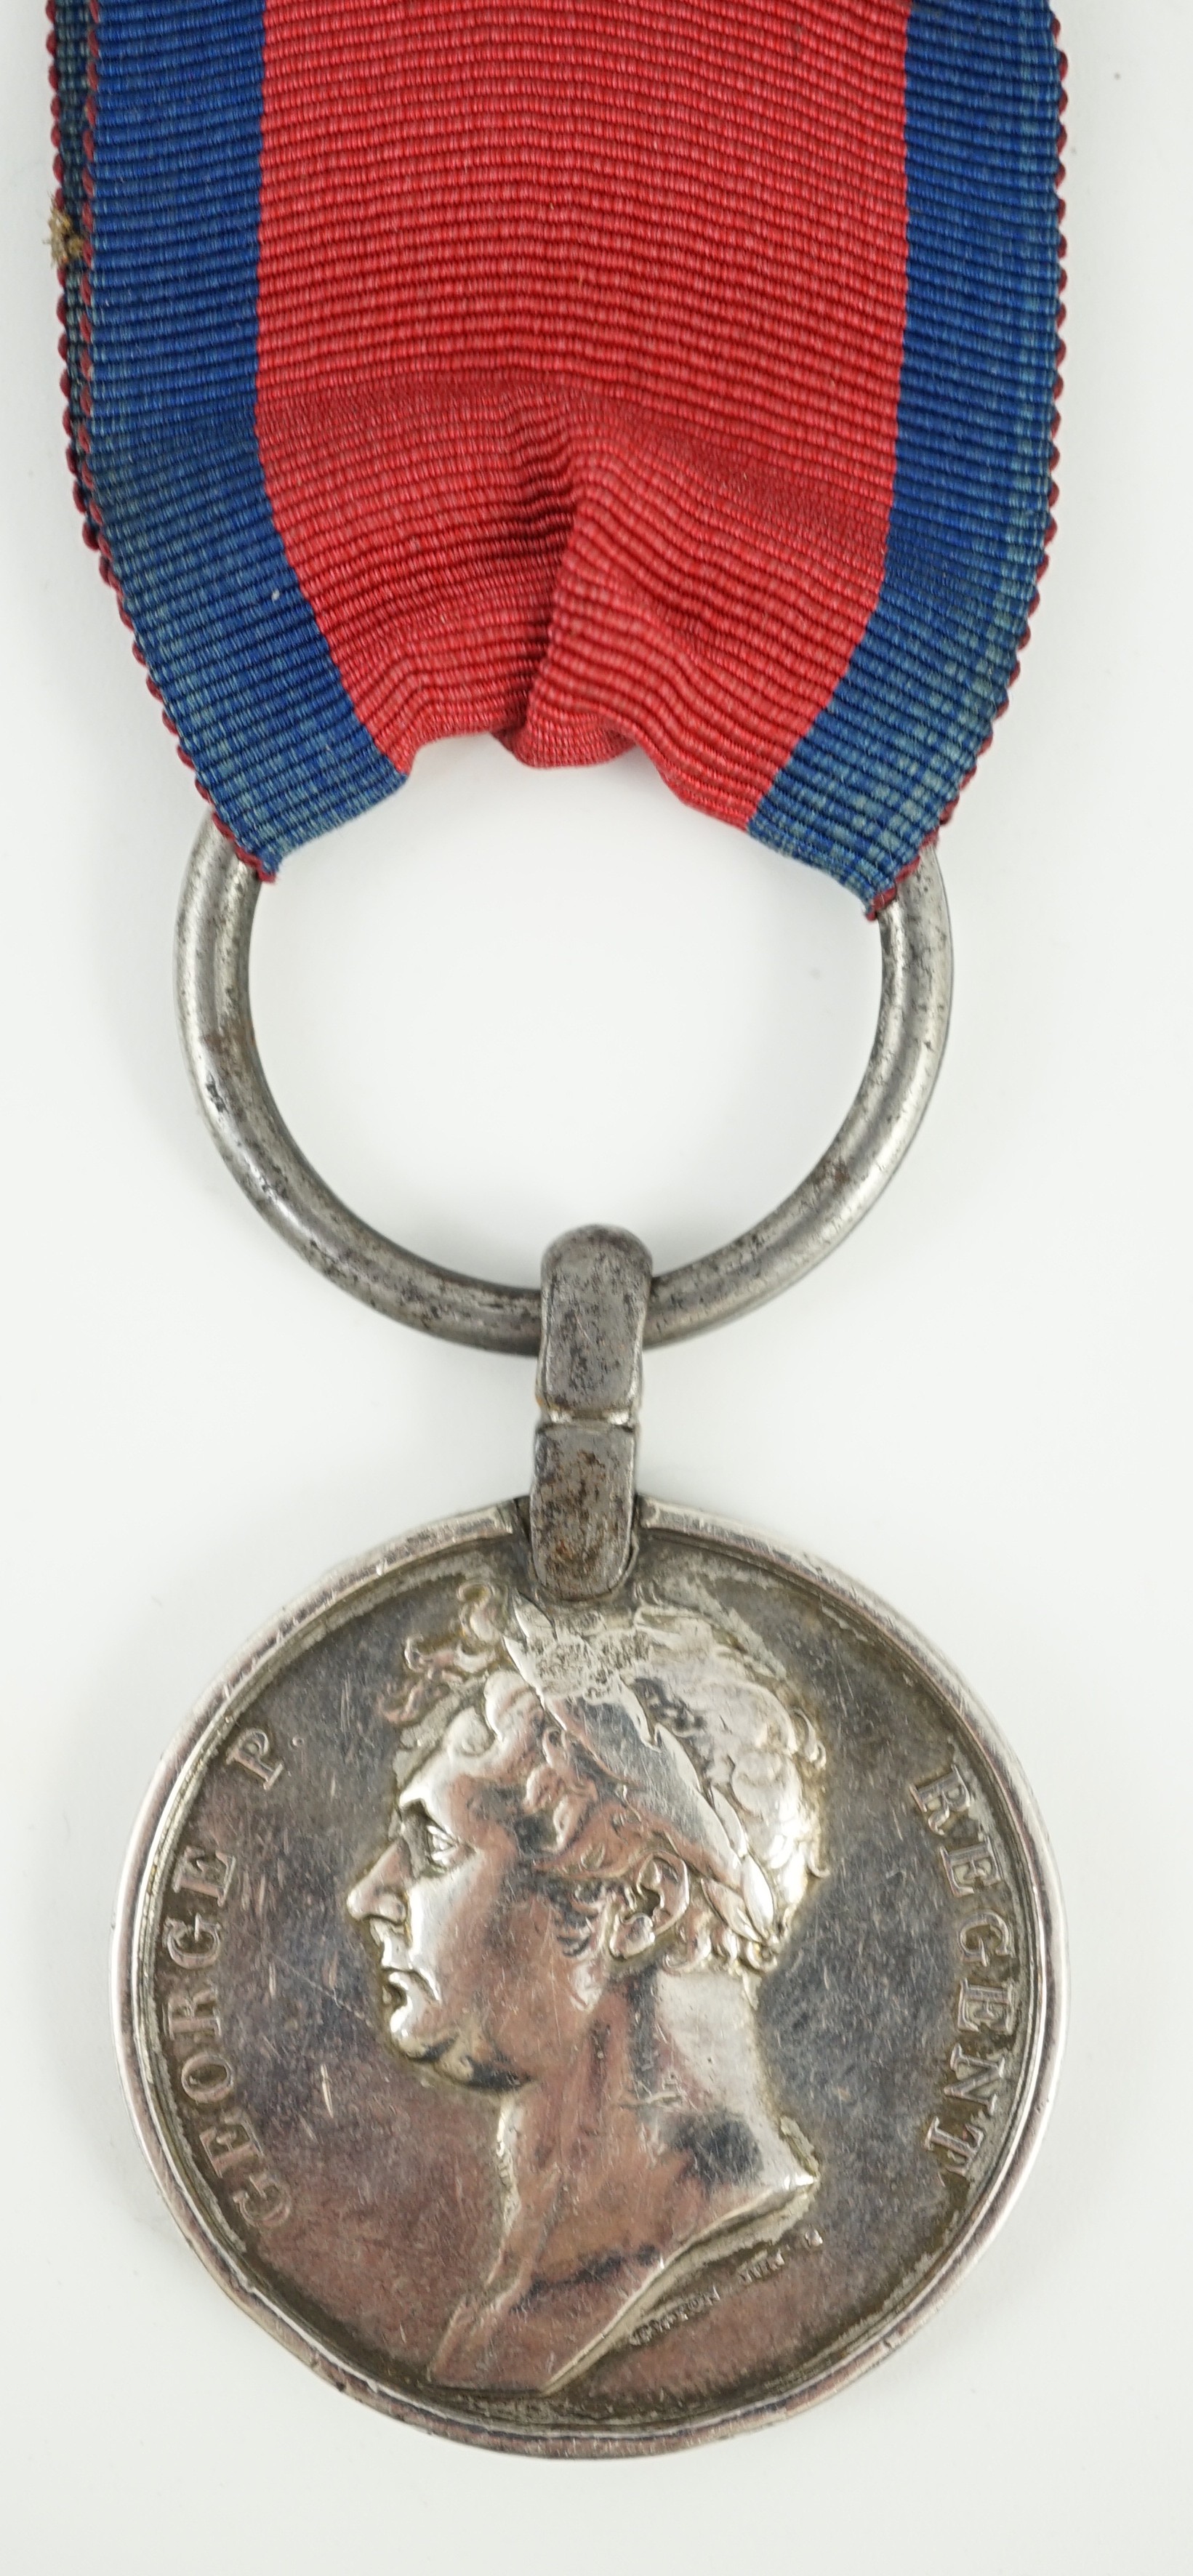 British campaign medals, Waterloo medal impressed Henry Weber 2nd Batt. 59th Reg. Foot steel - Image 5 of 9